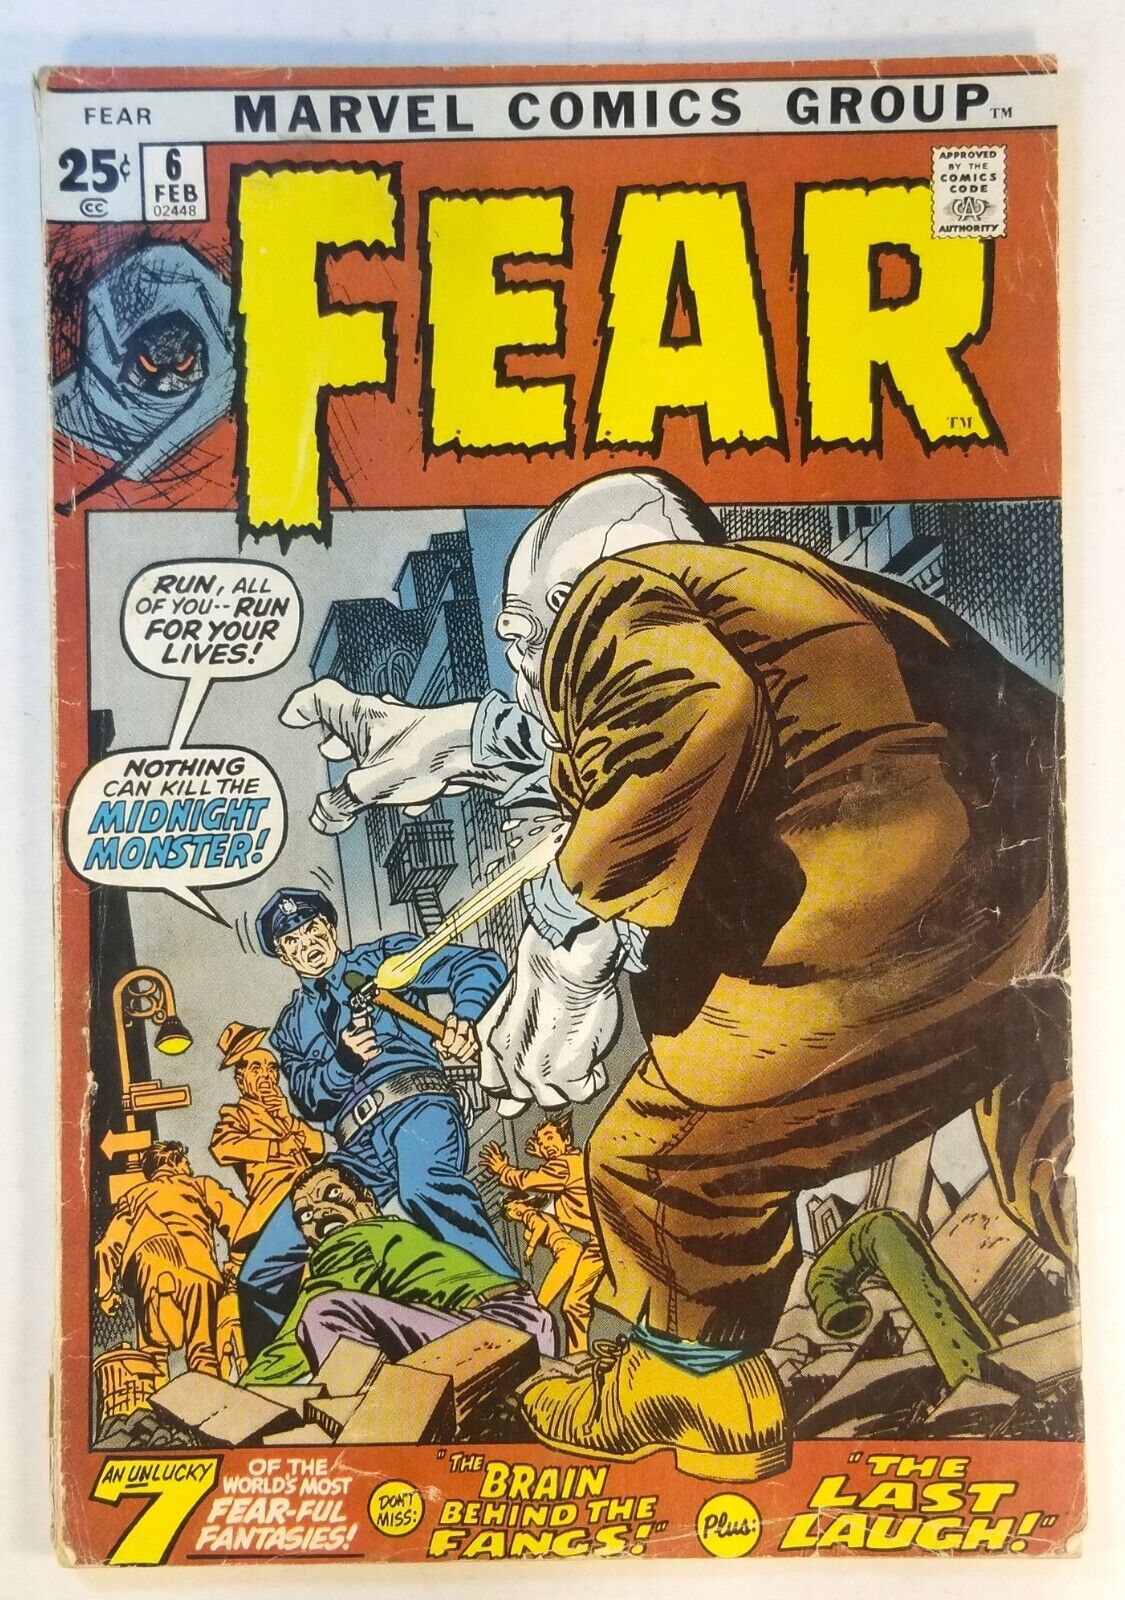 FEAR #6 MARVEL COMICS 1972 VG- REPRINTS Journey Into Mystery #79 JACK KIRBY ART